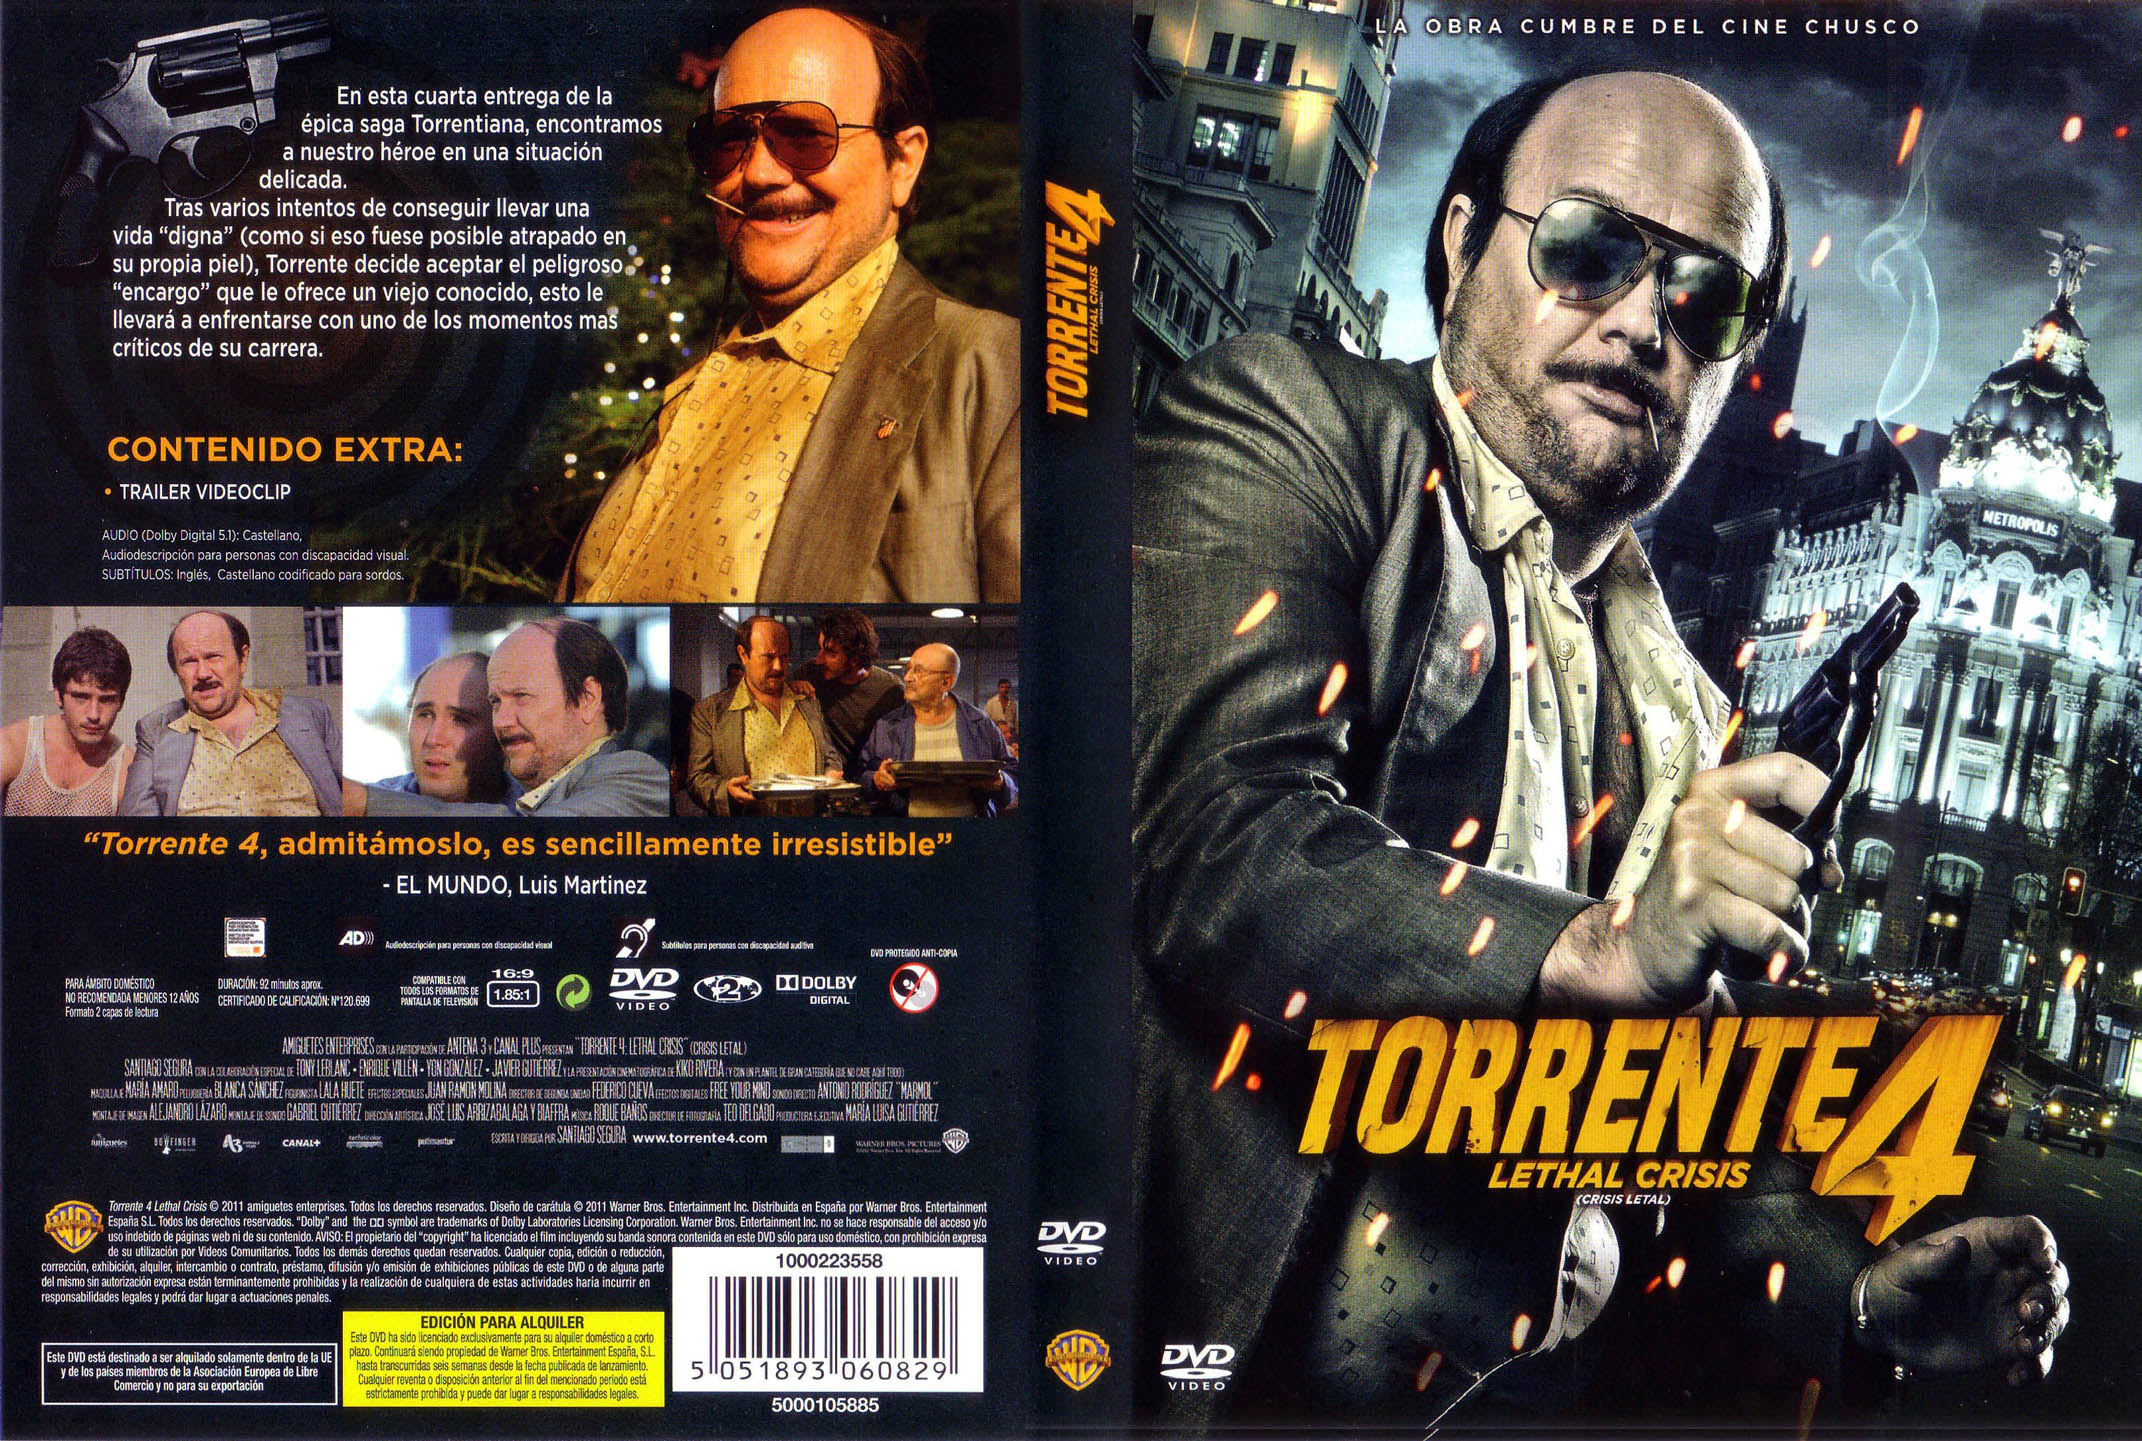 Jaquette DVD Torrente 4 Lethal Crisis